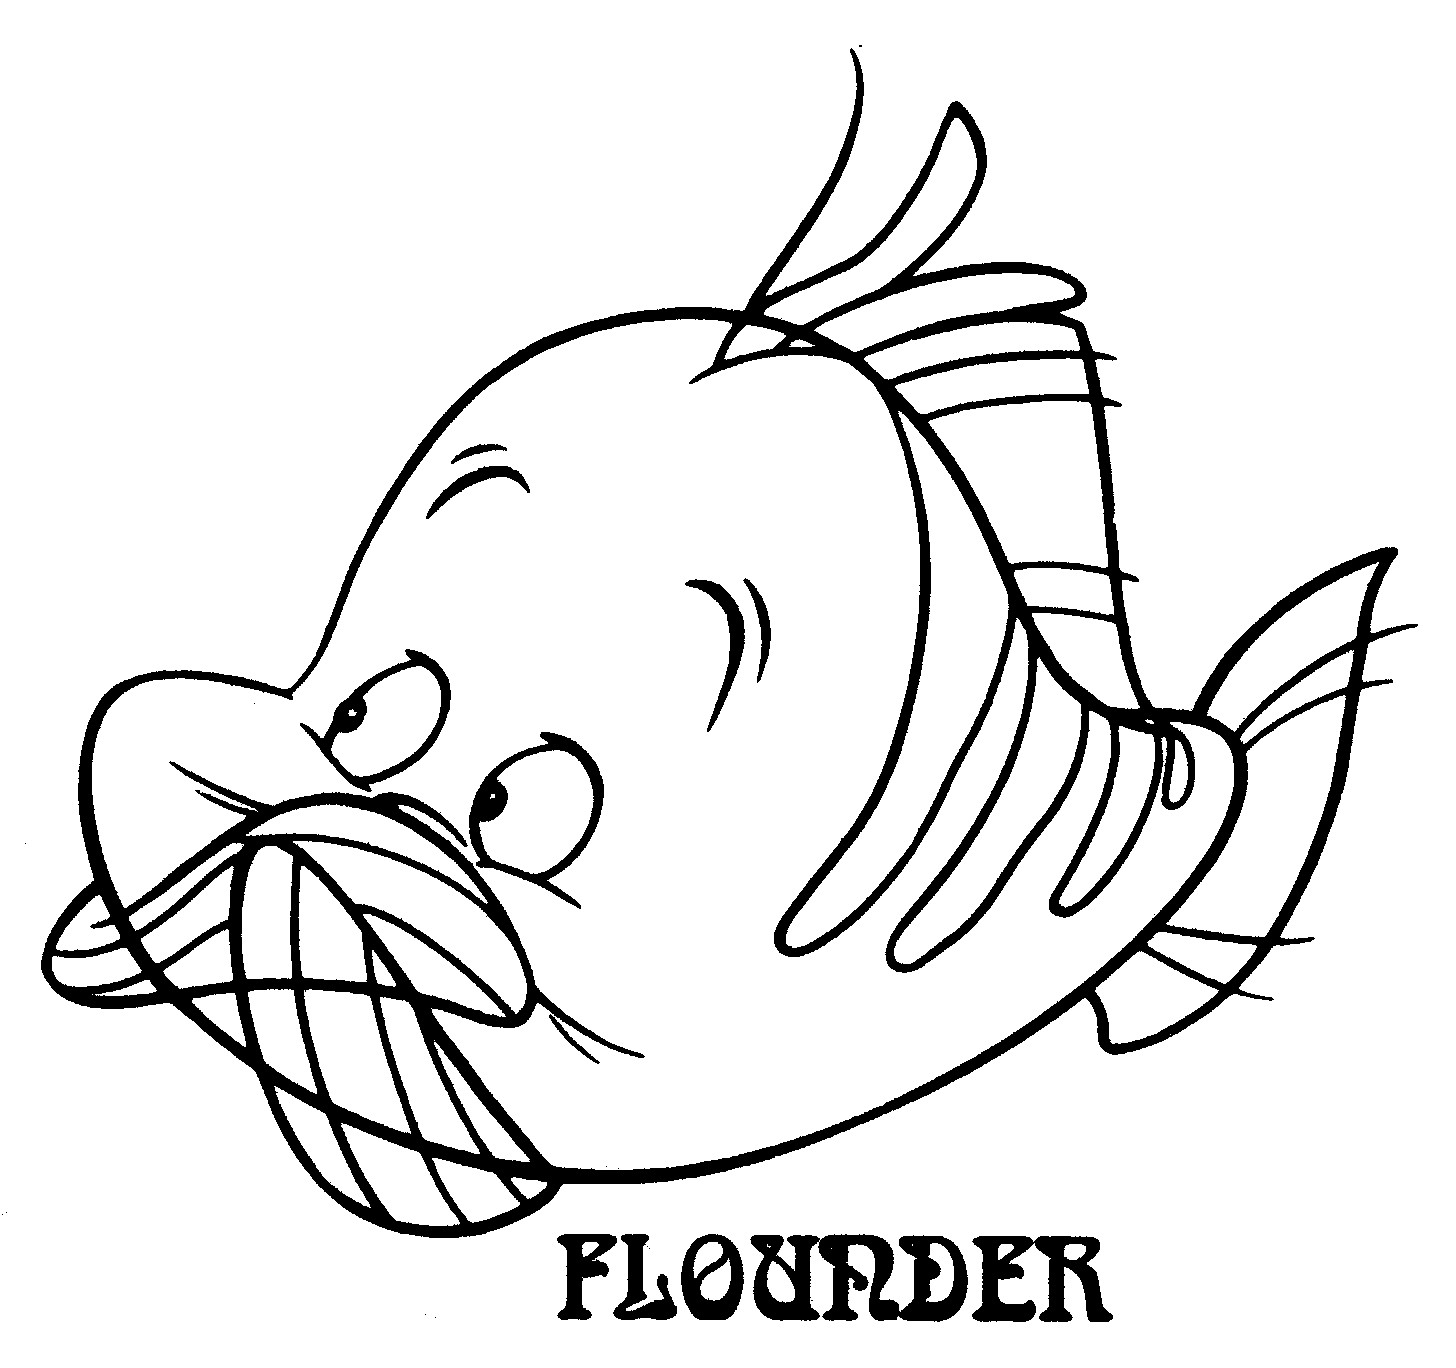 Flounder Coloring Pages
 Flounder Coloring Page Coloring Home